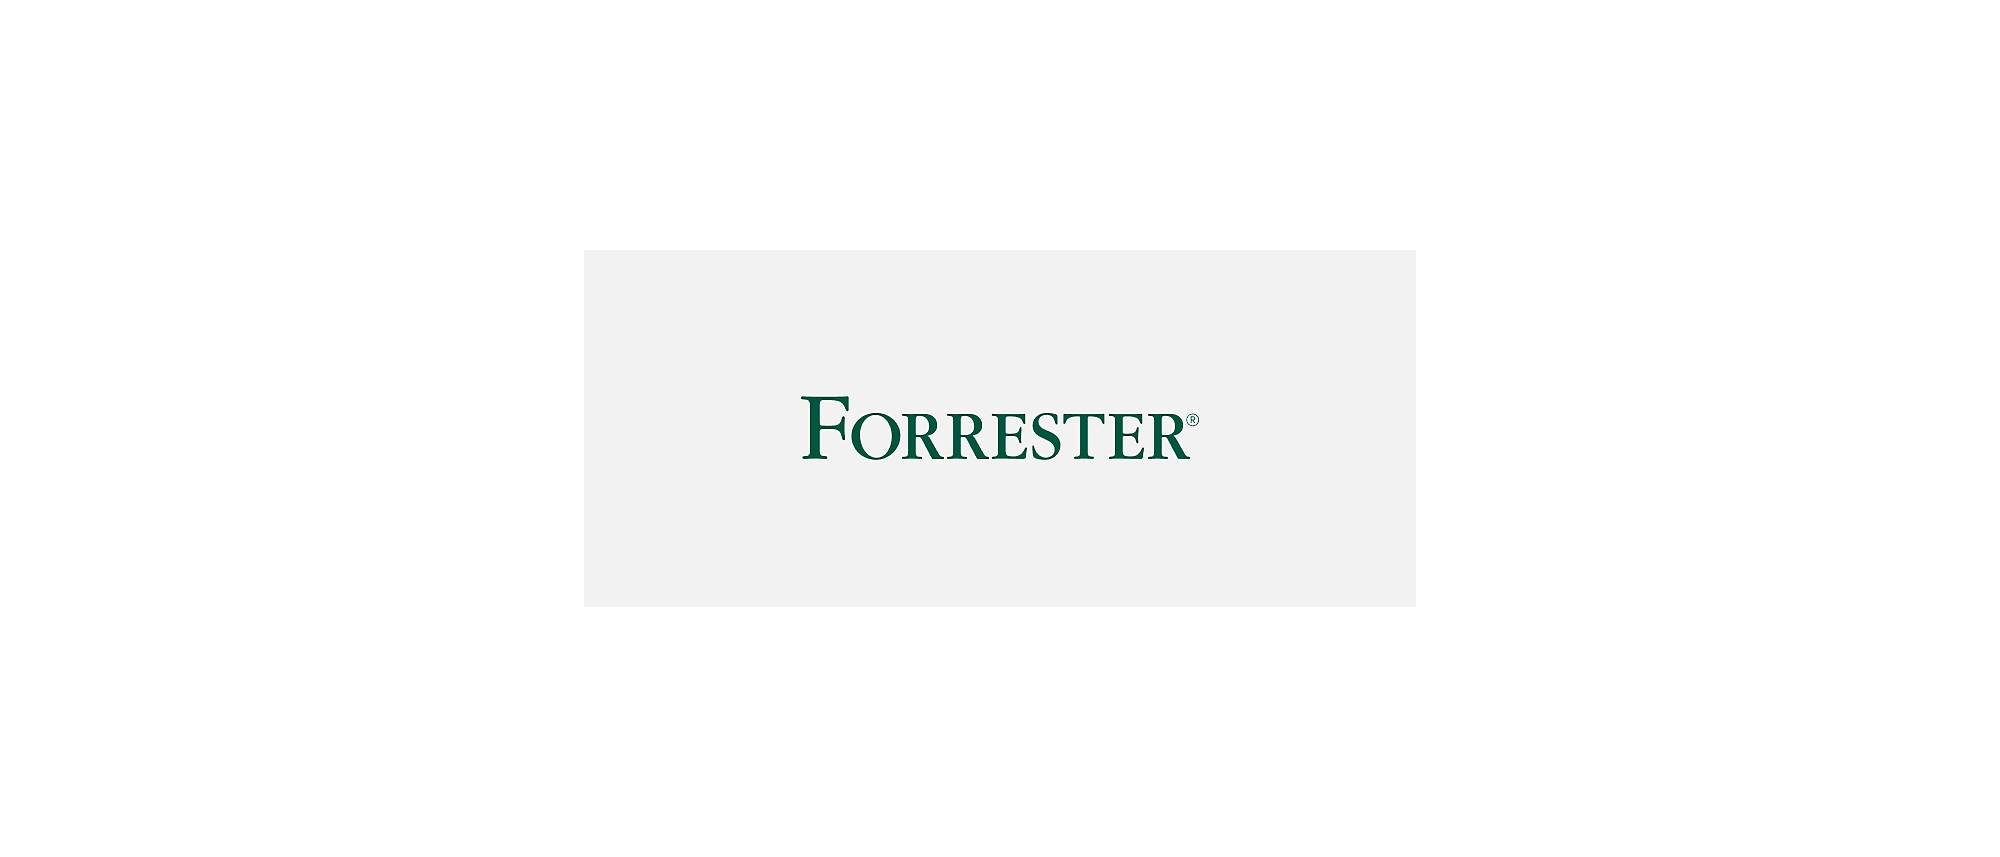 Logo Forestier